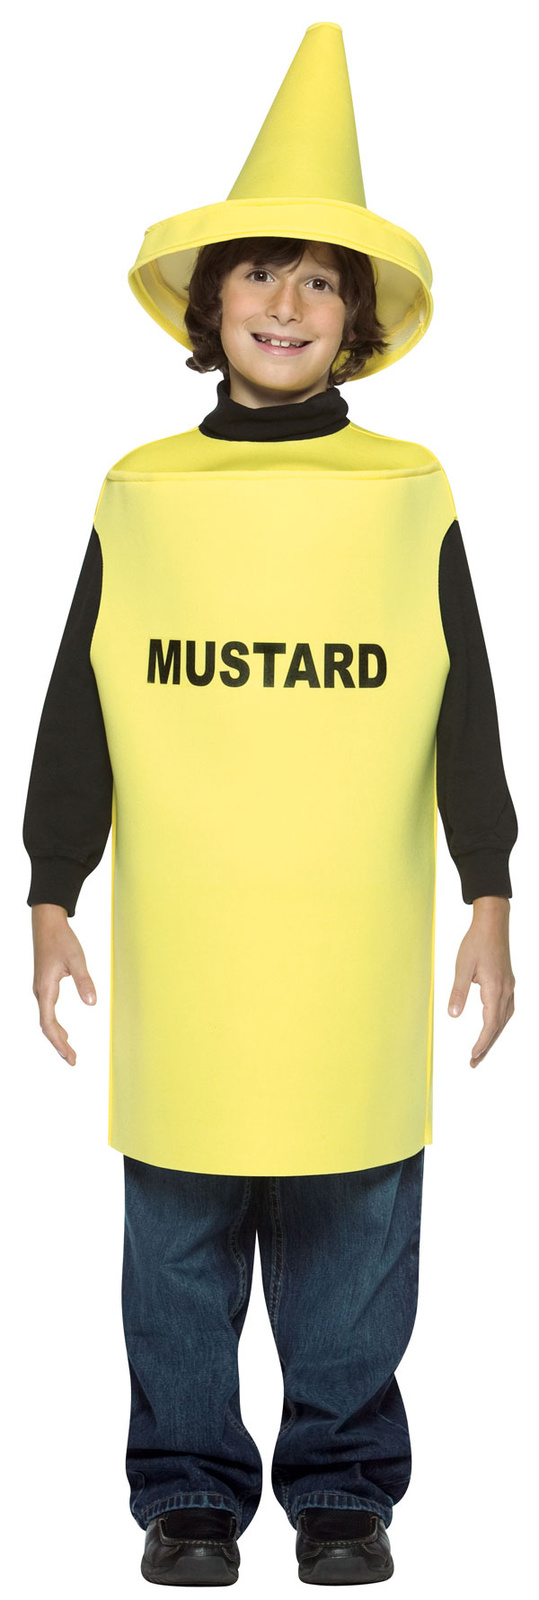 976-Child-Mustard-Costume-large